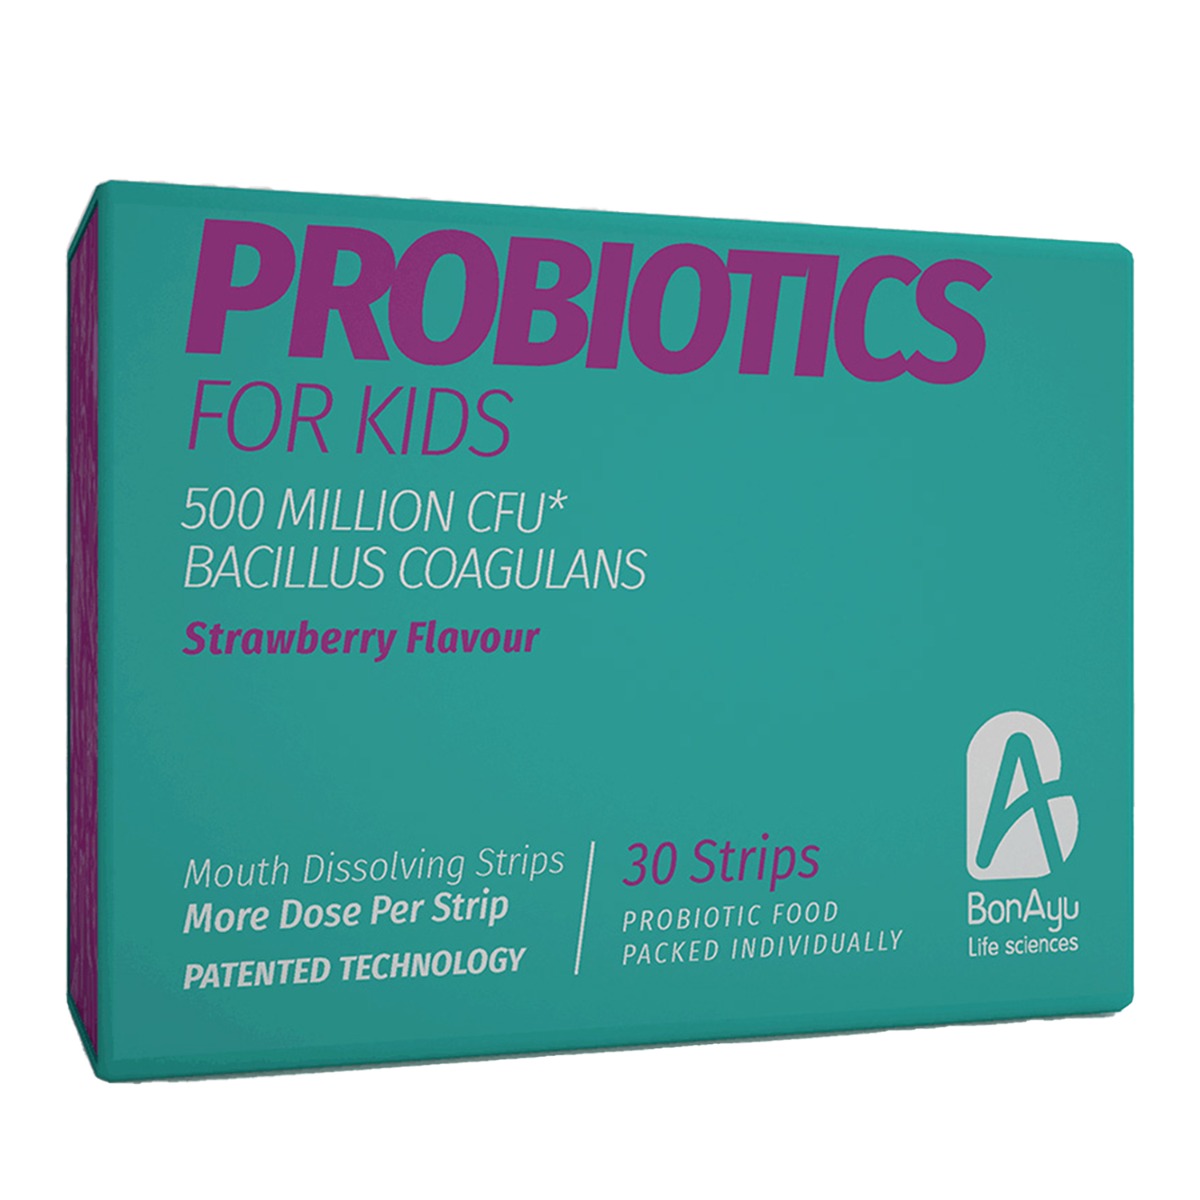 BonAyu Probiotics 500 Million CFU Bacillus Coagulans Strawberry Flavour Mouth Dissolving Strips, 30 Strips